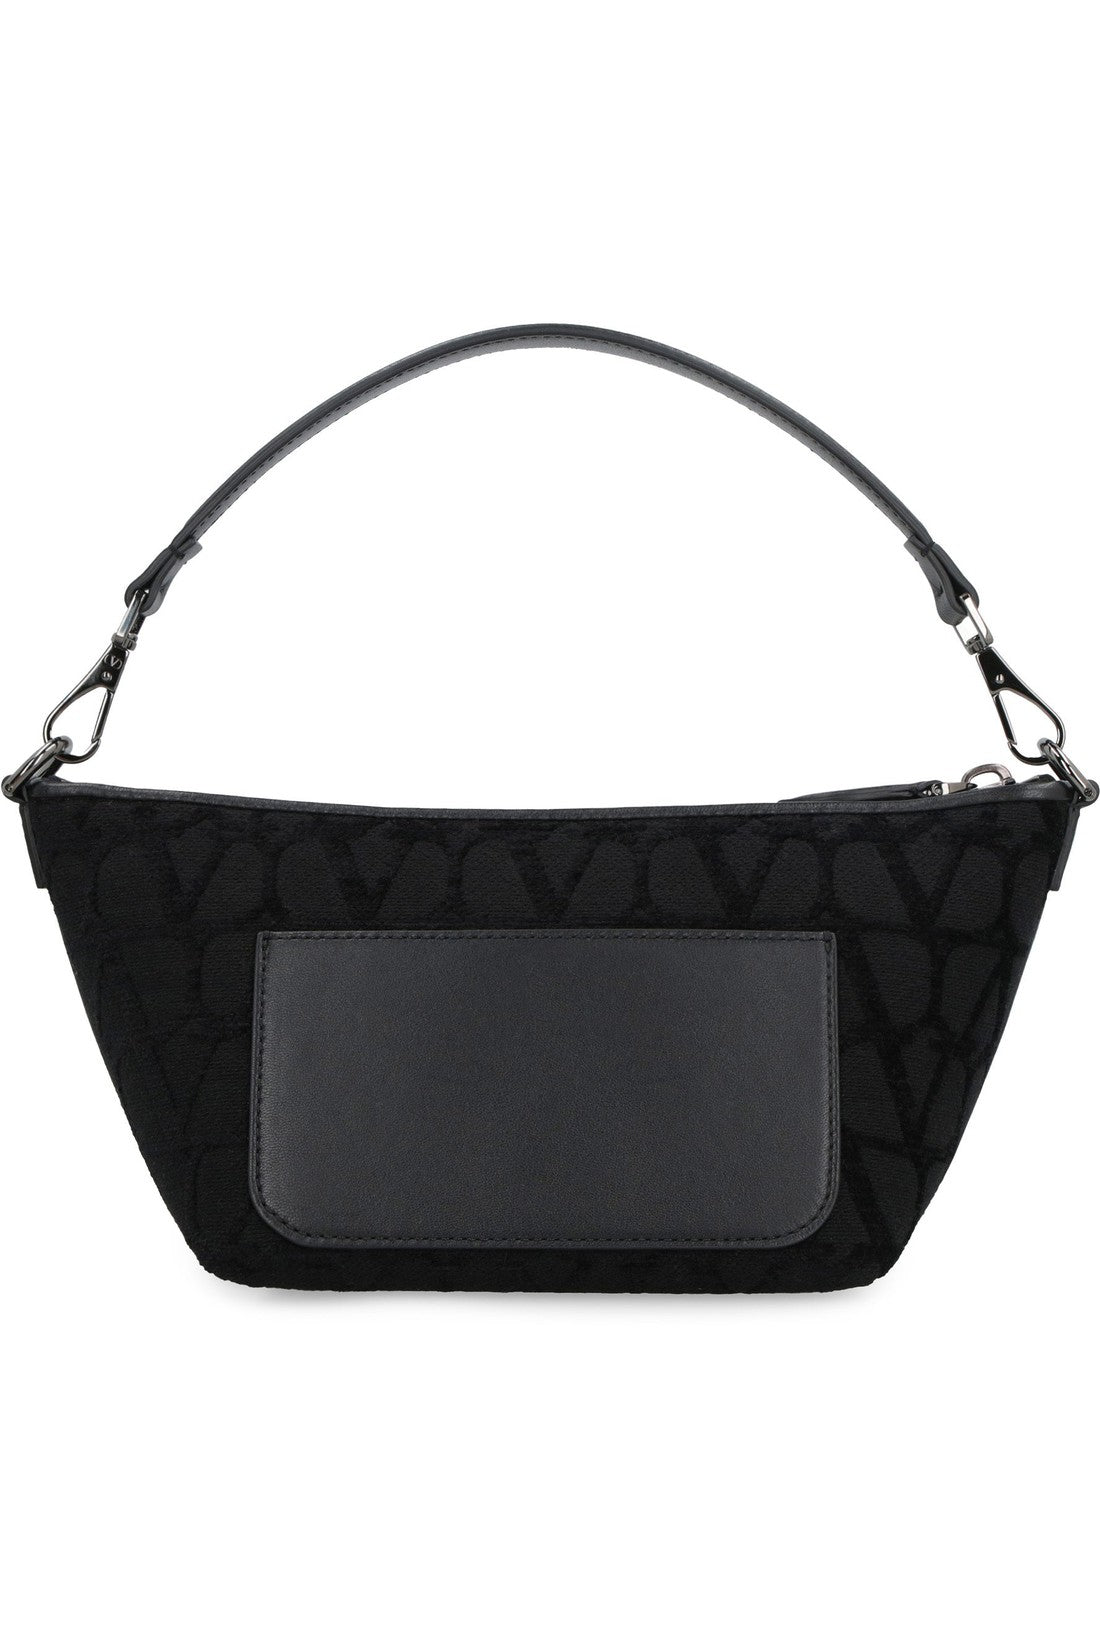 Valentino-OUTLET-SALE-Black Iconographe crossbody bag-ARCHIVIST